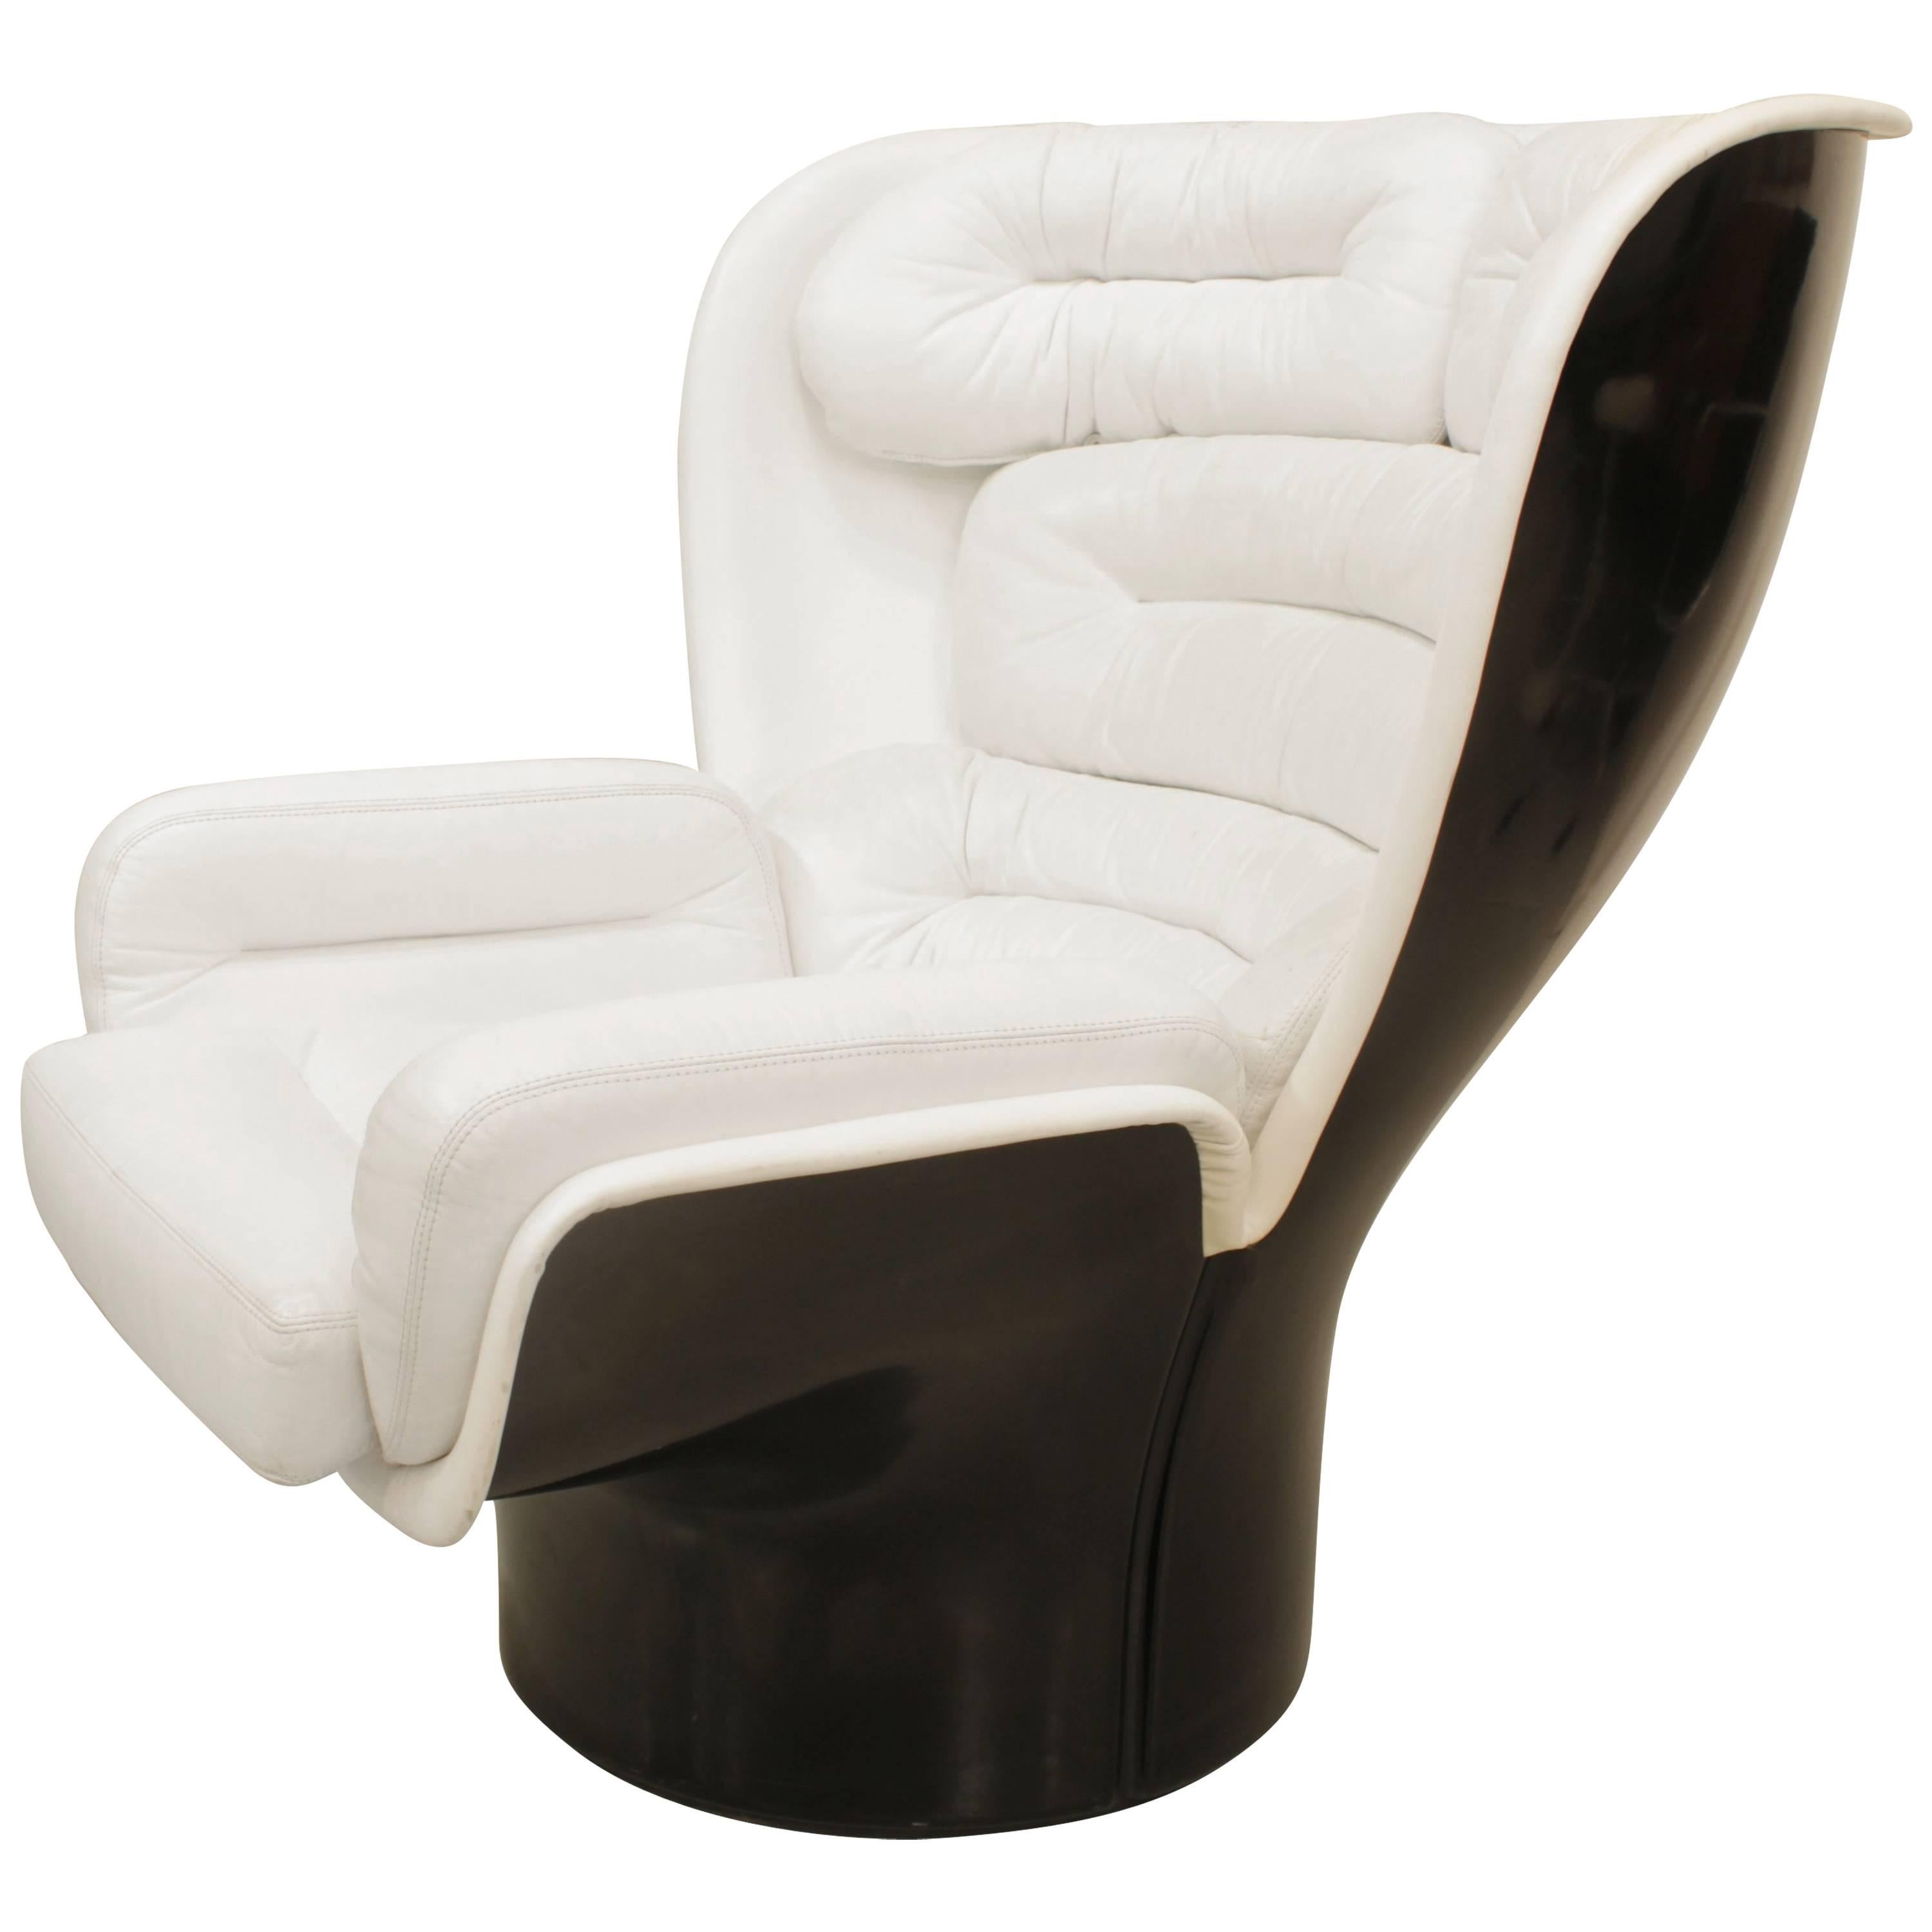 Joe Colombo Elda Lounge Chair